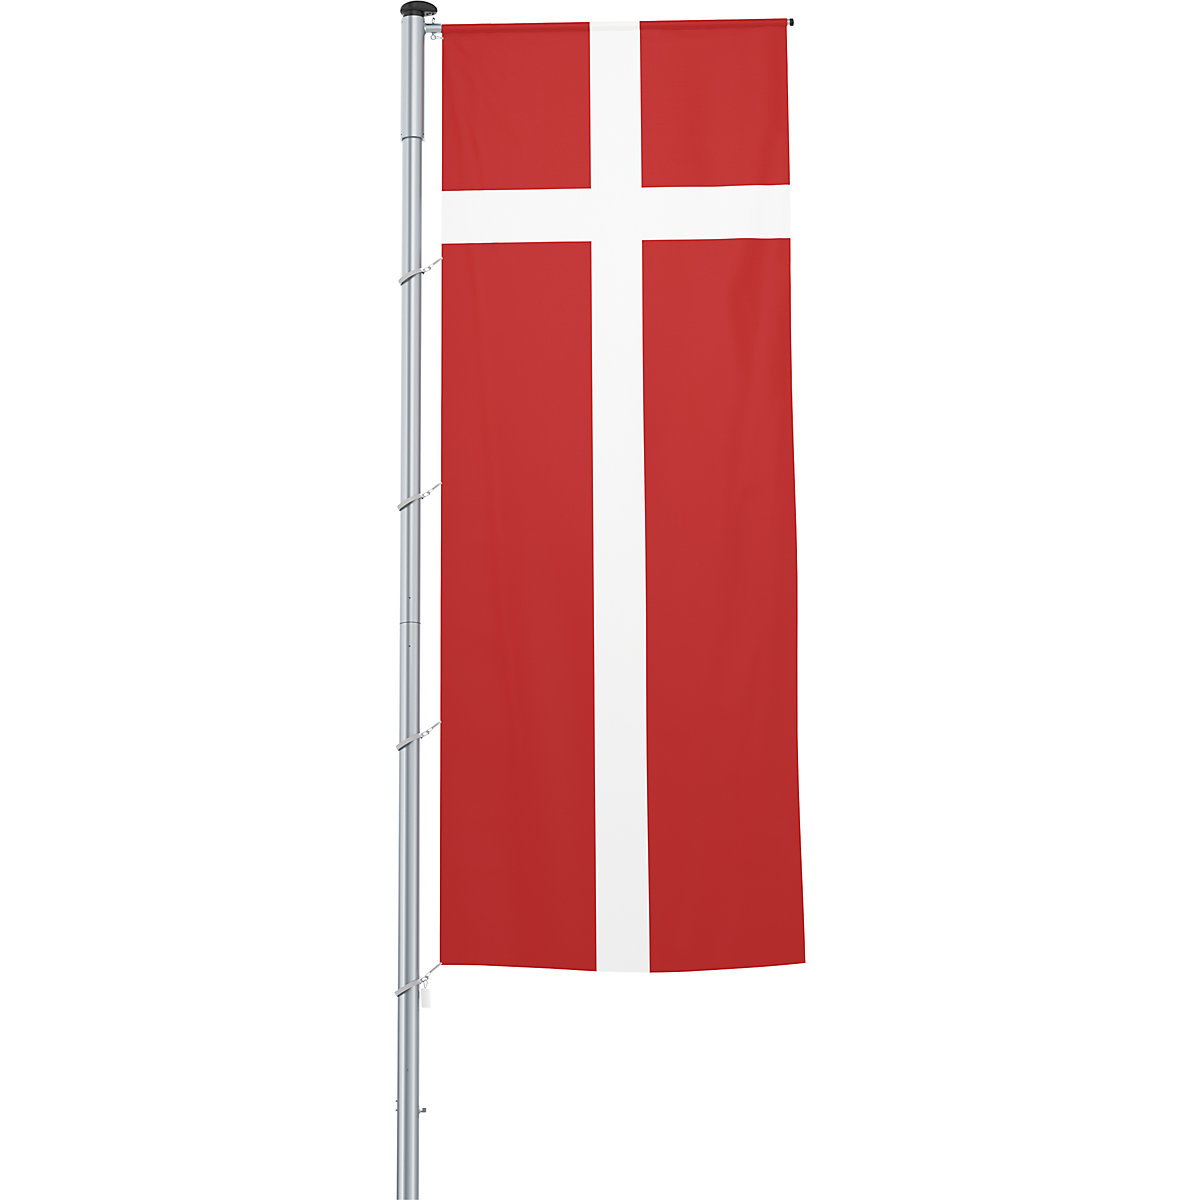 Mannus – Bandera con pluma/bandera del país, formato 1,2 x 3 m, Dinamarca